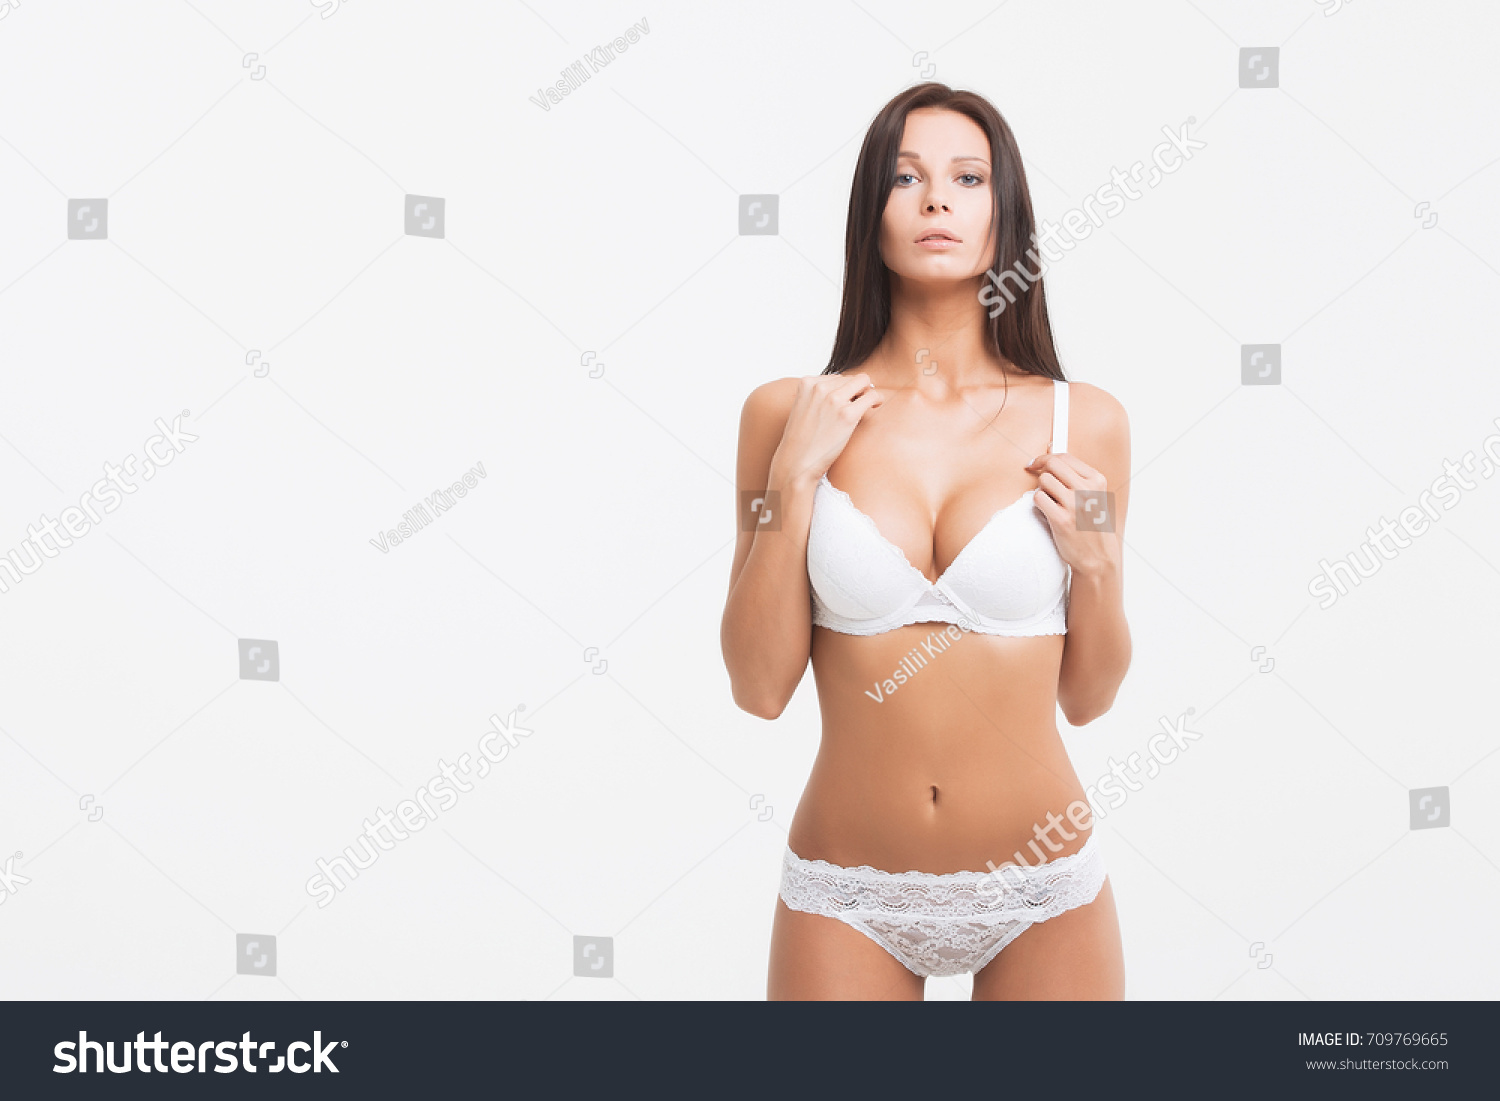 Perfect body shape sexy nude girl